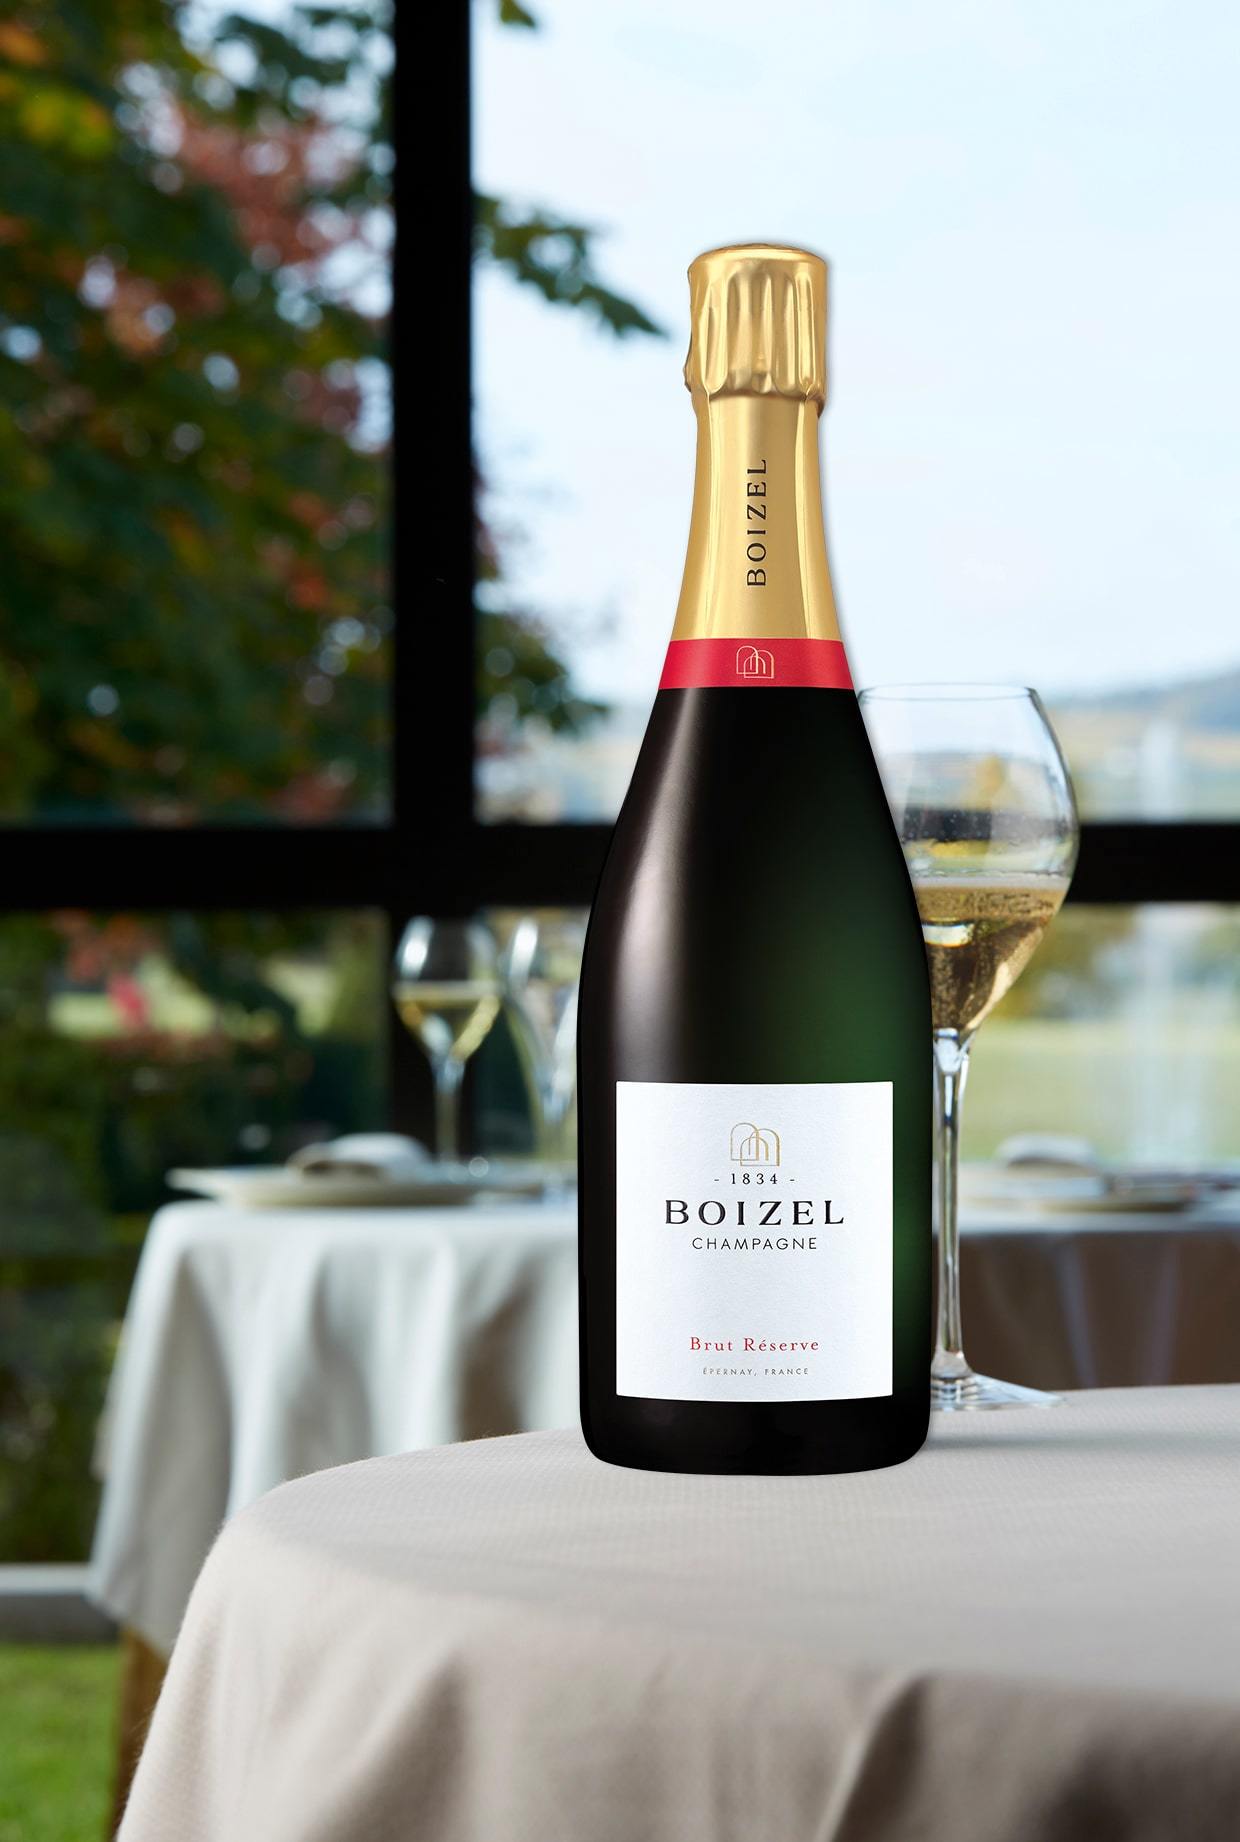 Accueil - Champagne Boizel - Epernay France